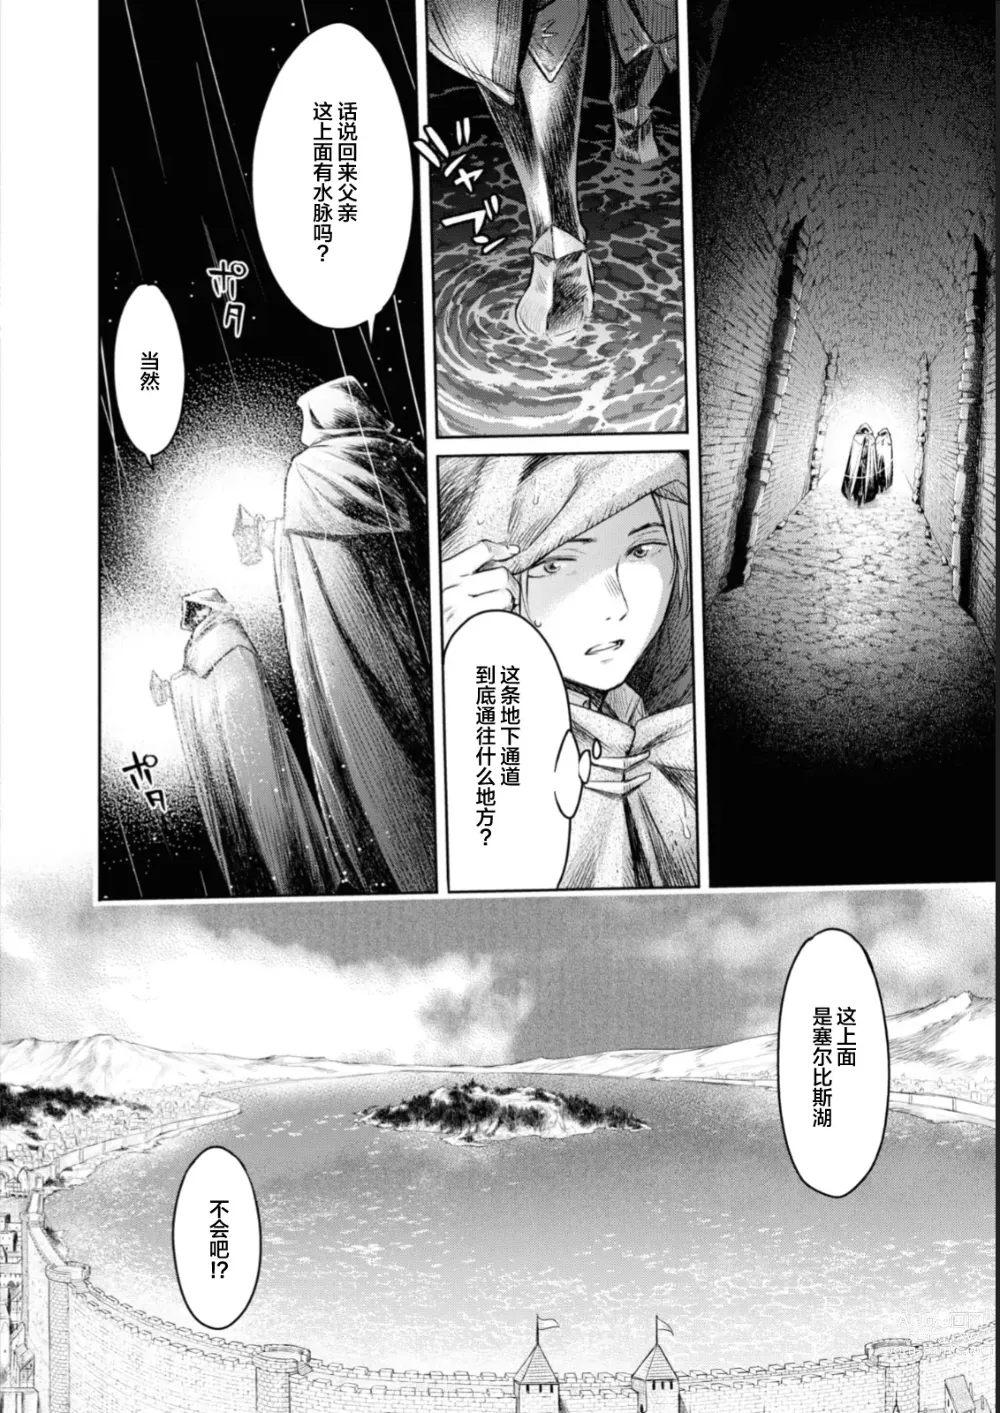 Page 3 of manga Nageki no Alicia - Sorrow of Alicia Bunsatsuban: 4